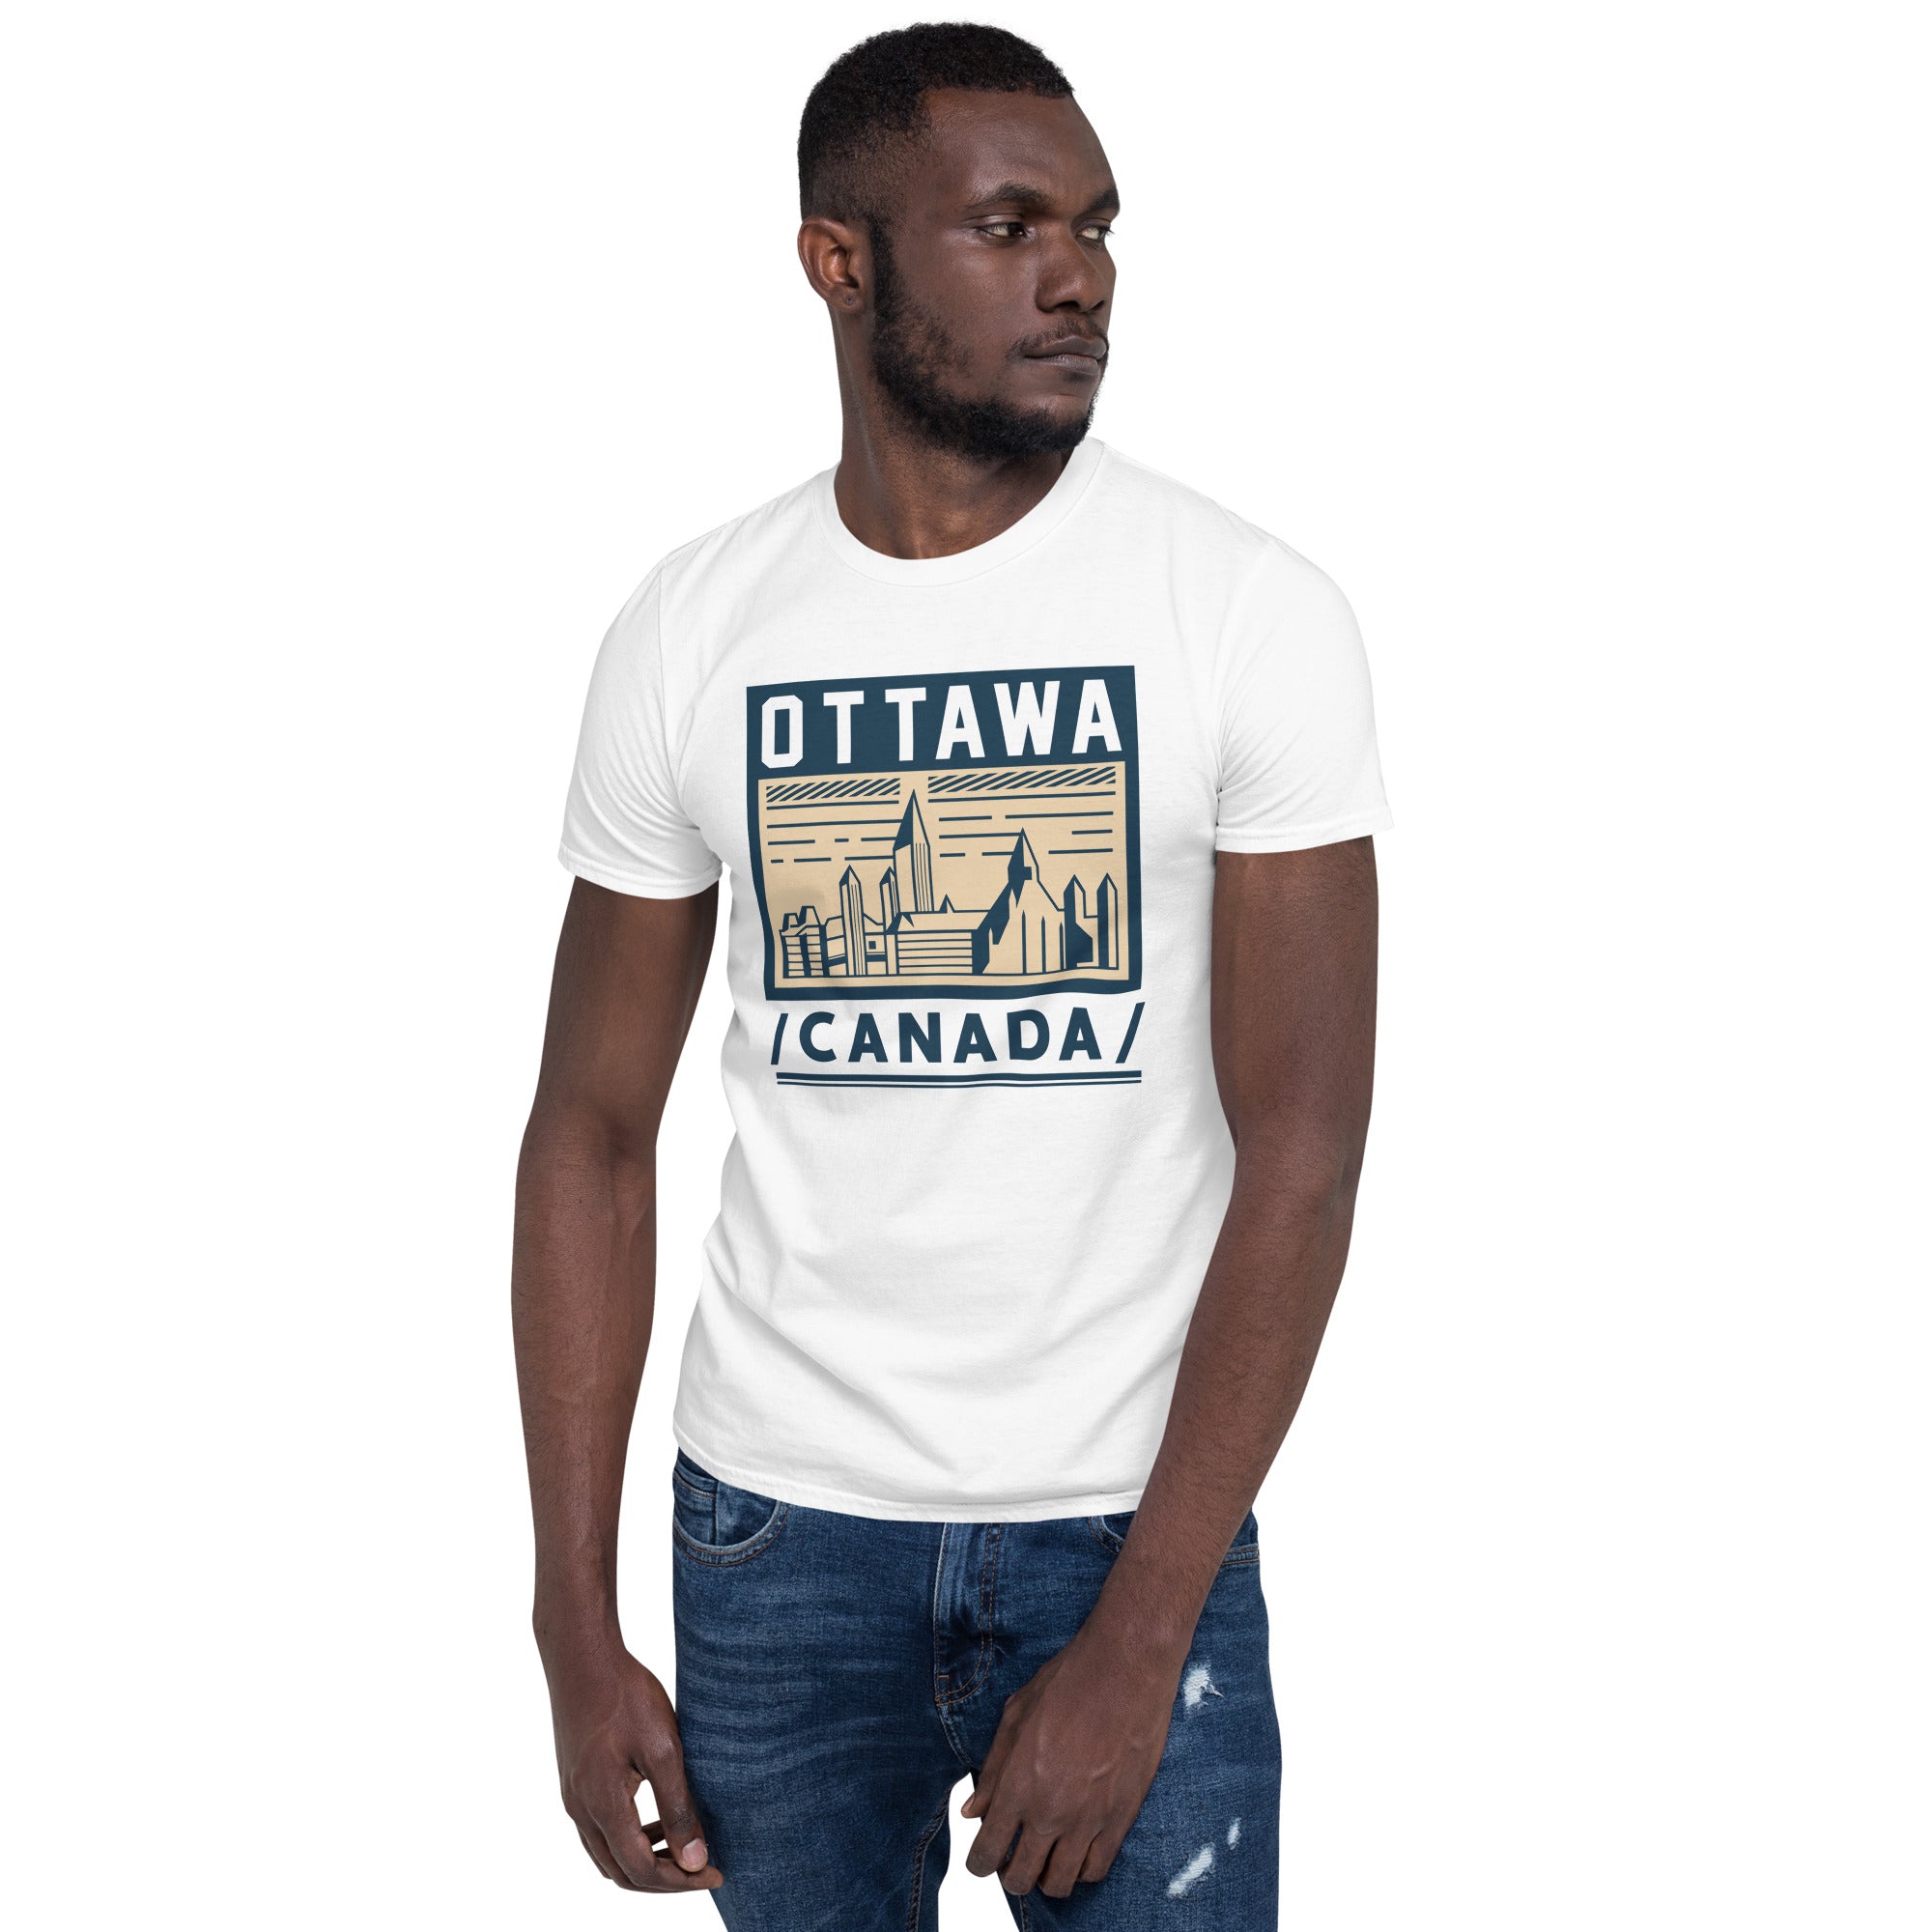 Ottawa - Short-Sleeve Unisex T-Shirt